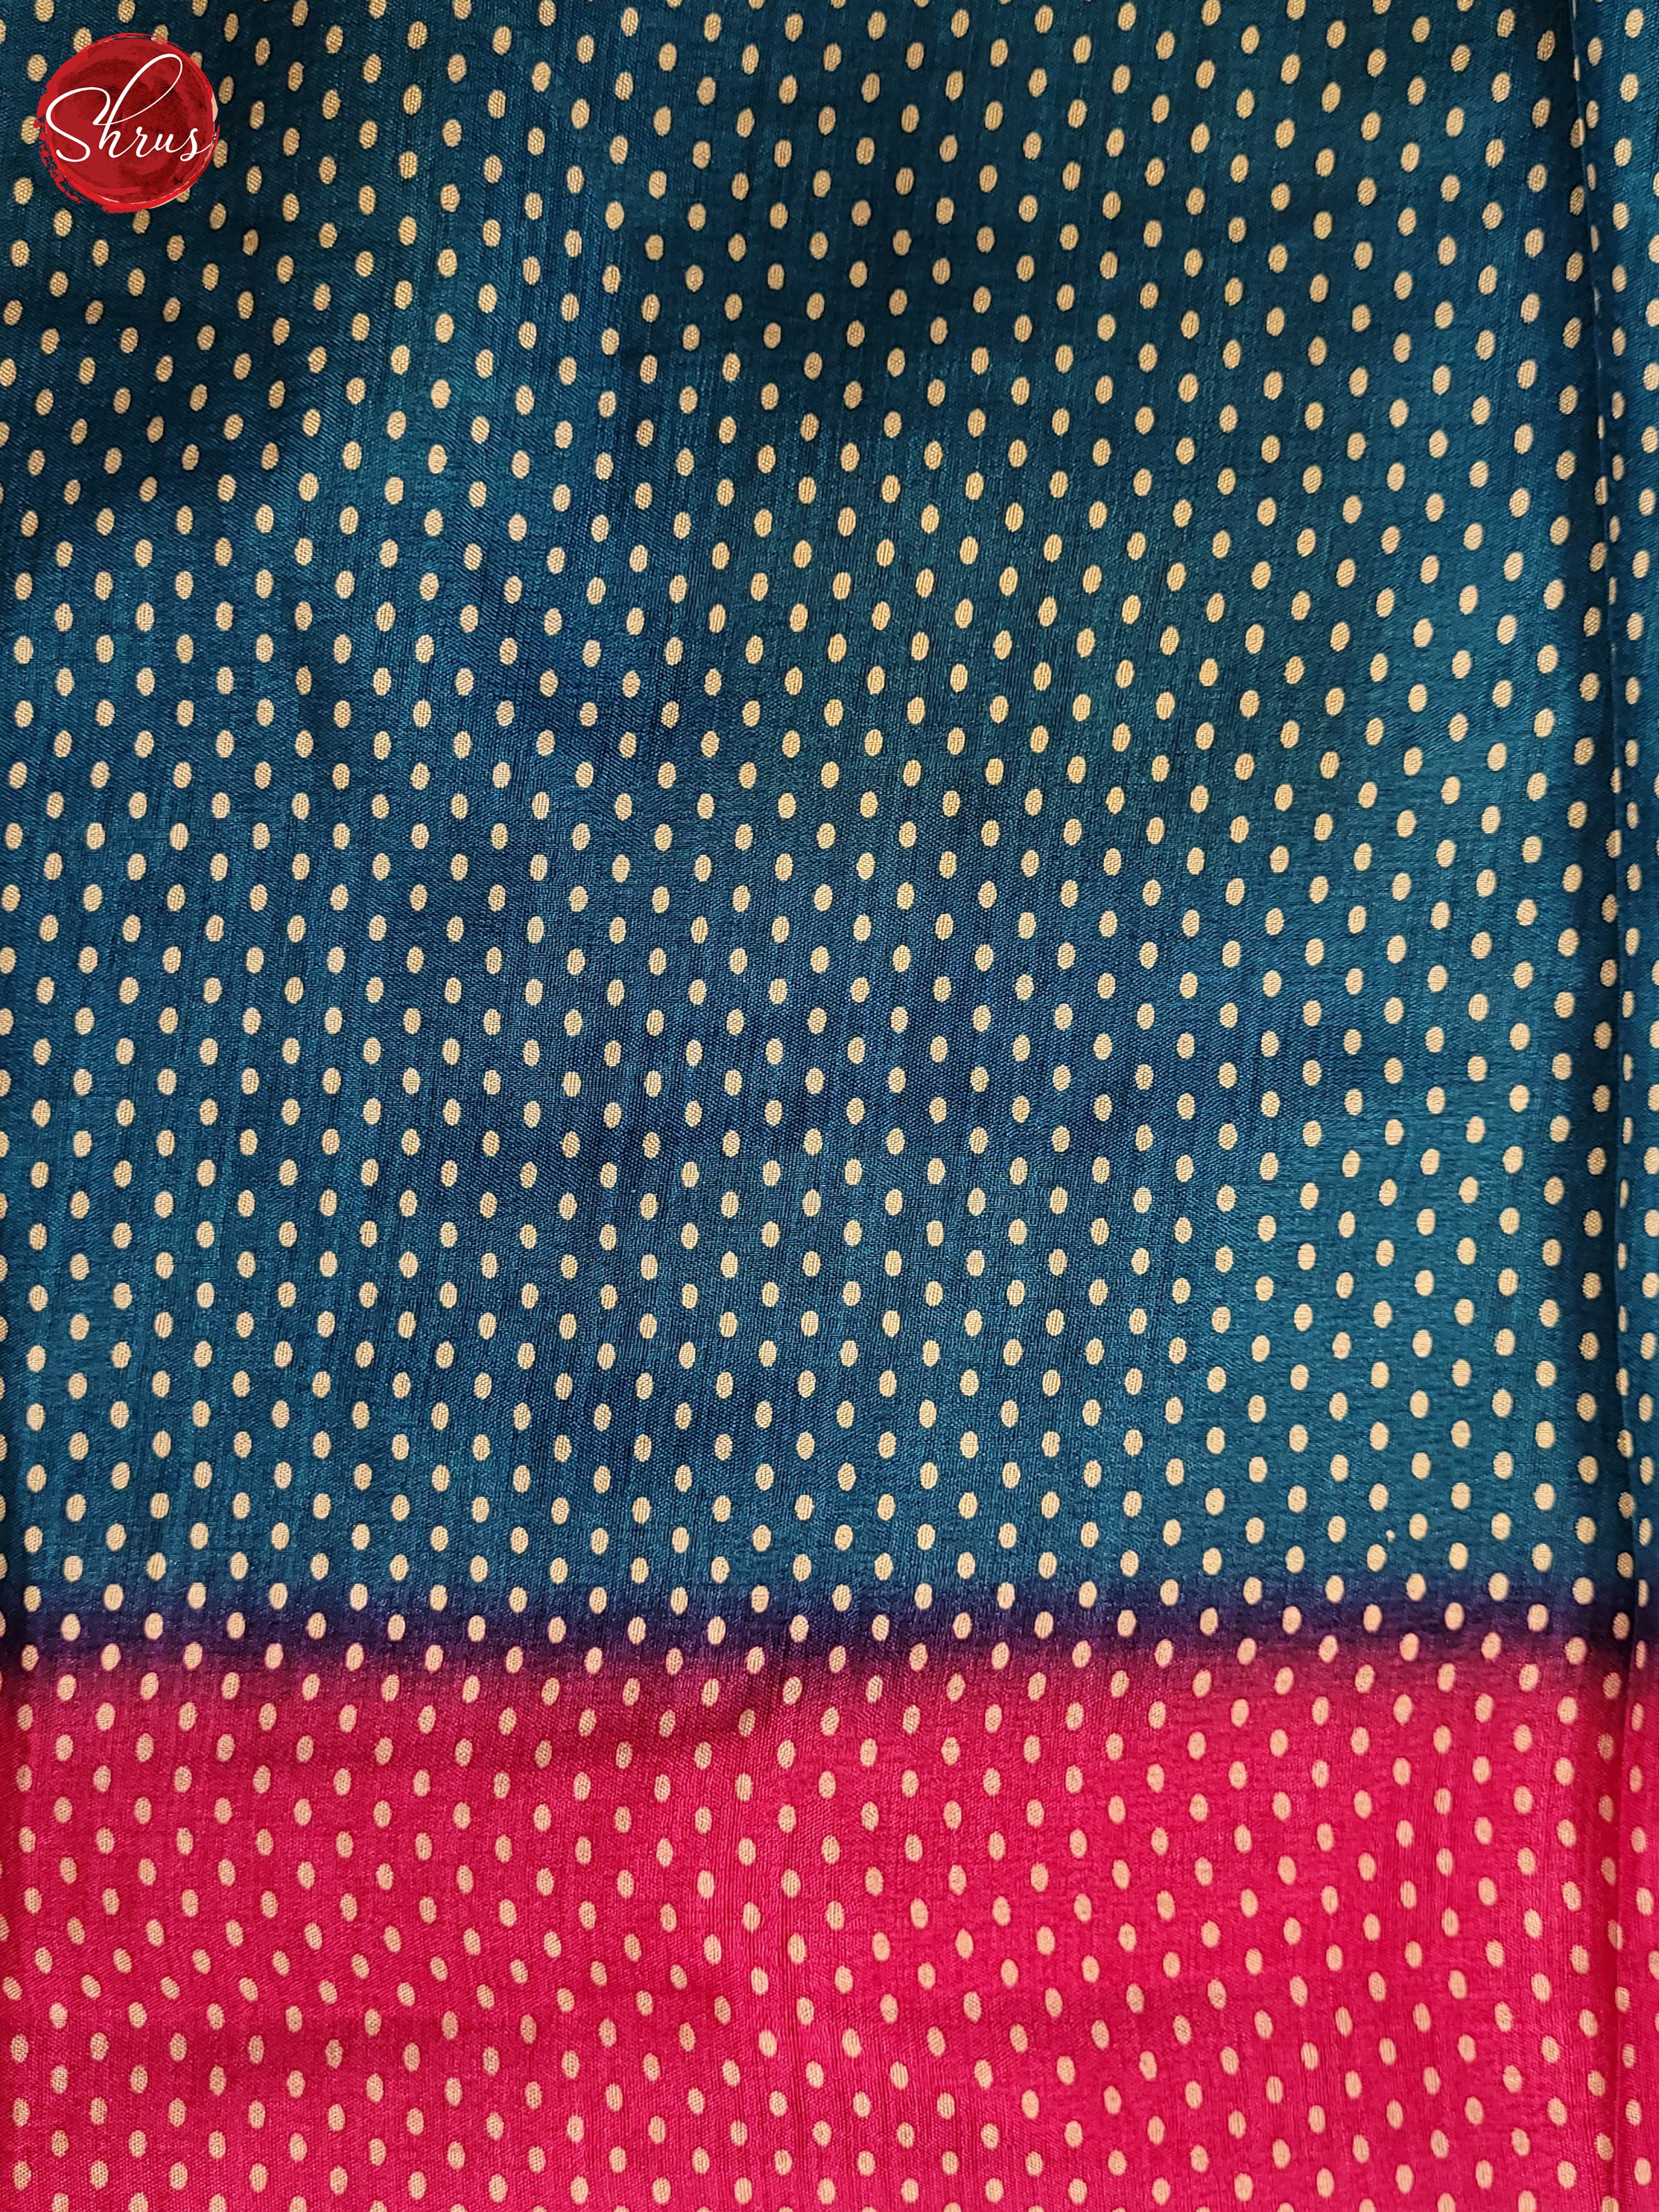 Blue & Pink - Semi Crepe Saree - Shop on ShrusEternity.com